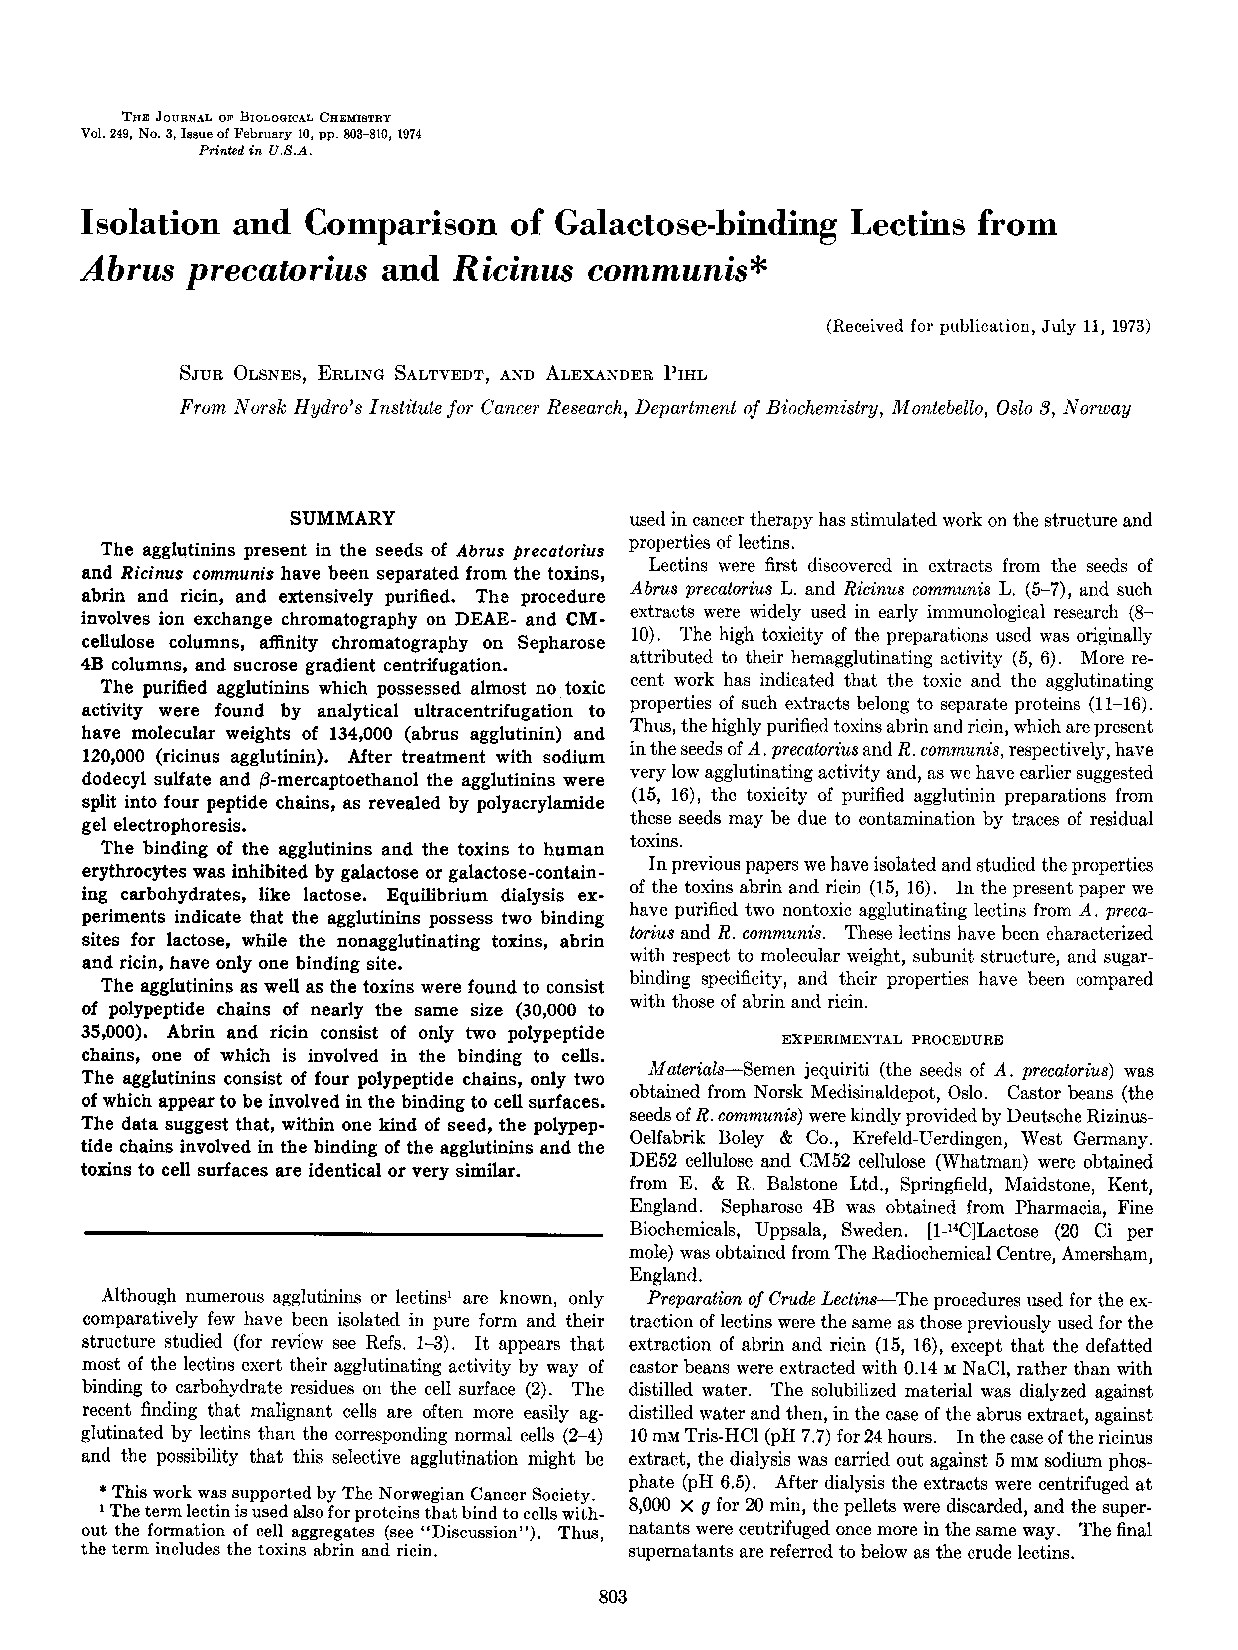 Isolation and Comparison of Galactose-binding Lectins from Abris precatorius and Ricinus Communis